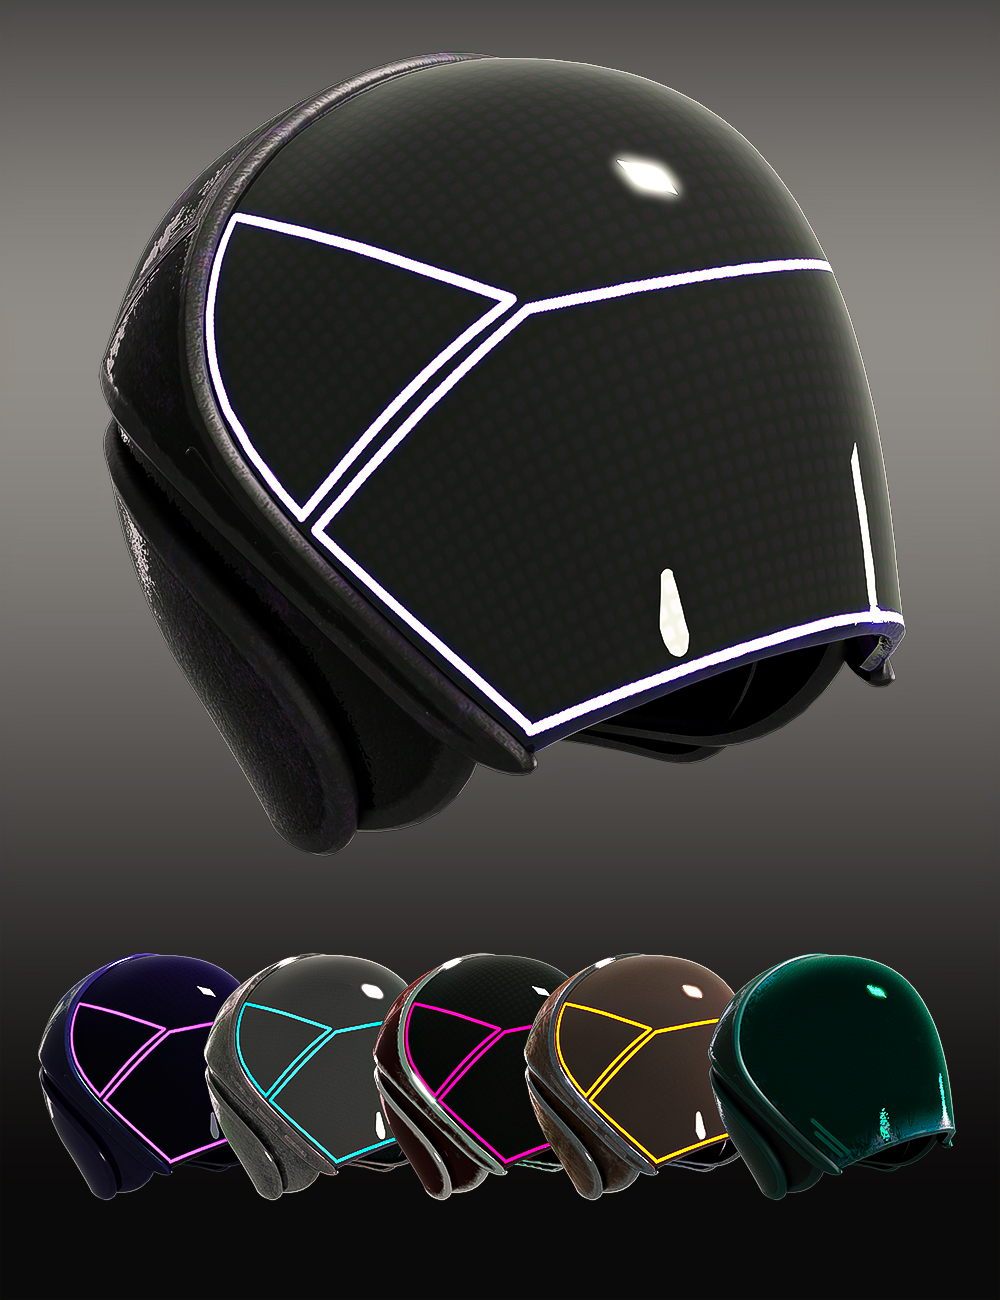 Sci-fi Rebel Rider Outfit Helmet for Genesis 8.1 Female